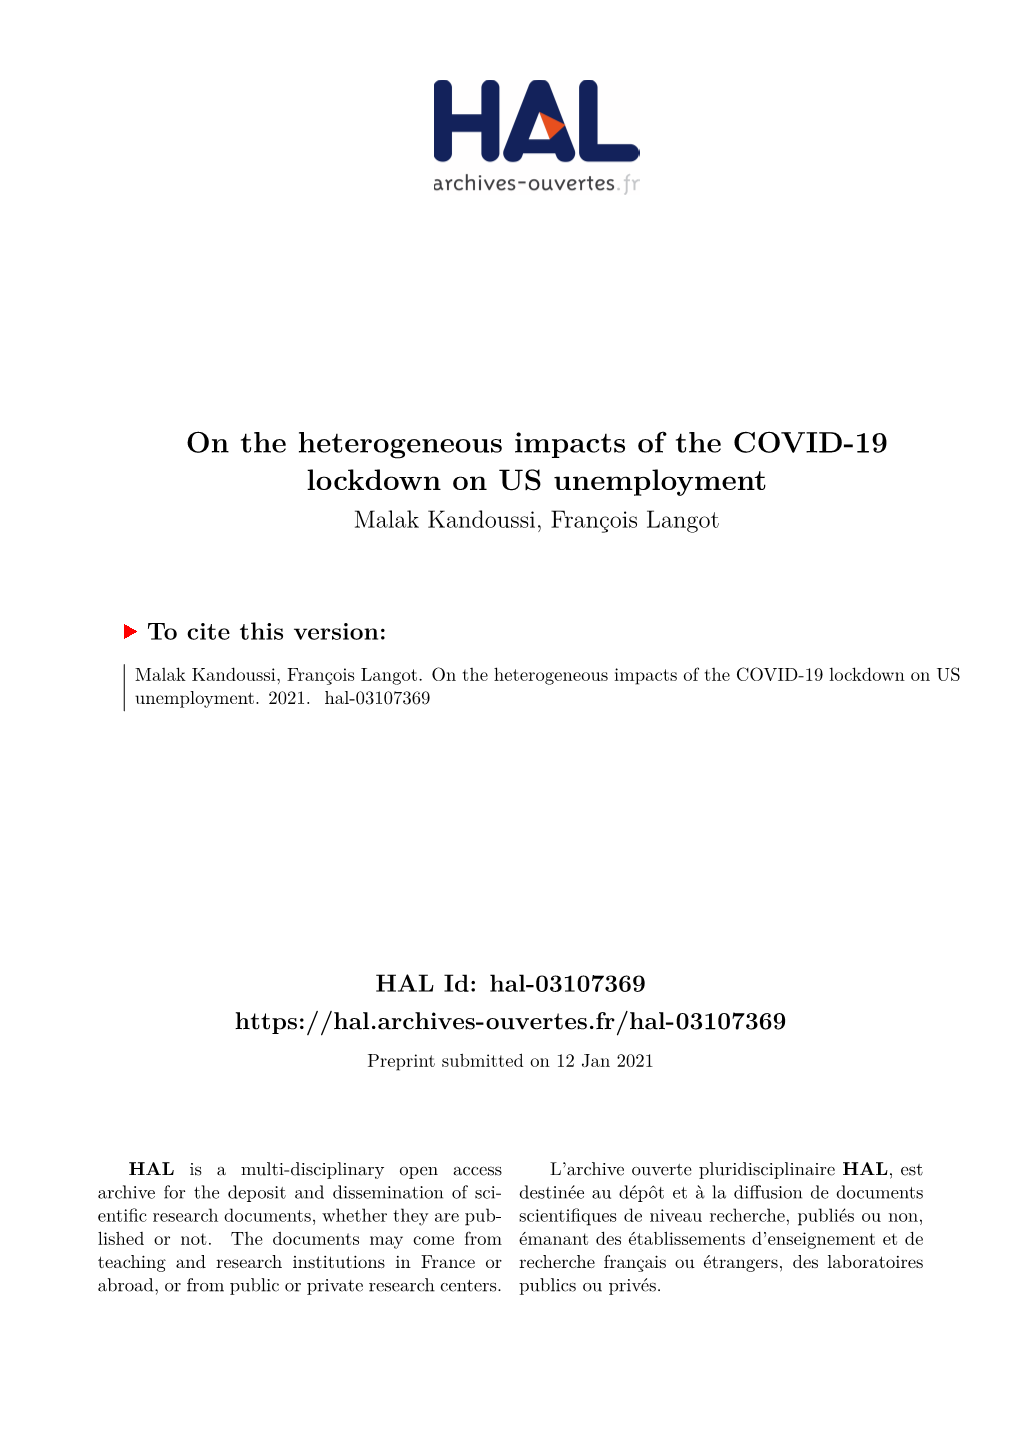 On the Heterogeneous Impacts of the COVID-19 Lockdown on US Unemployment Malak Kandoussi, François Langot